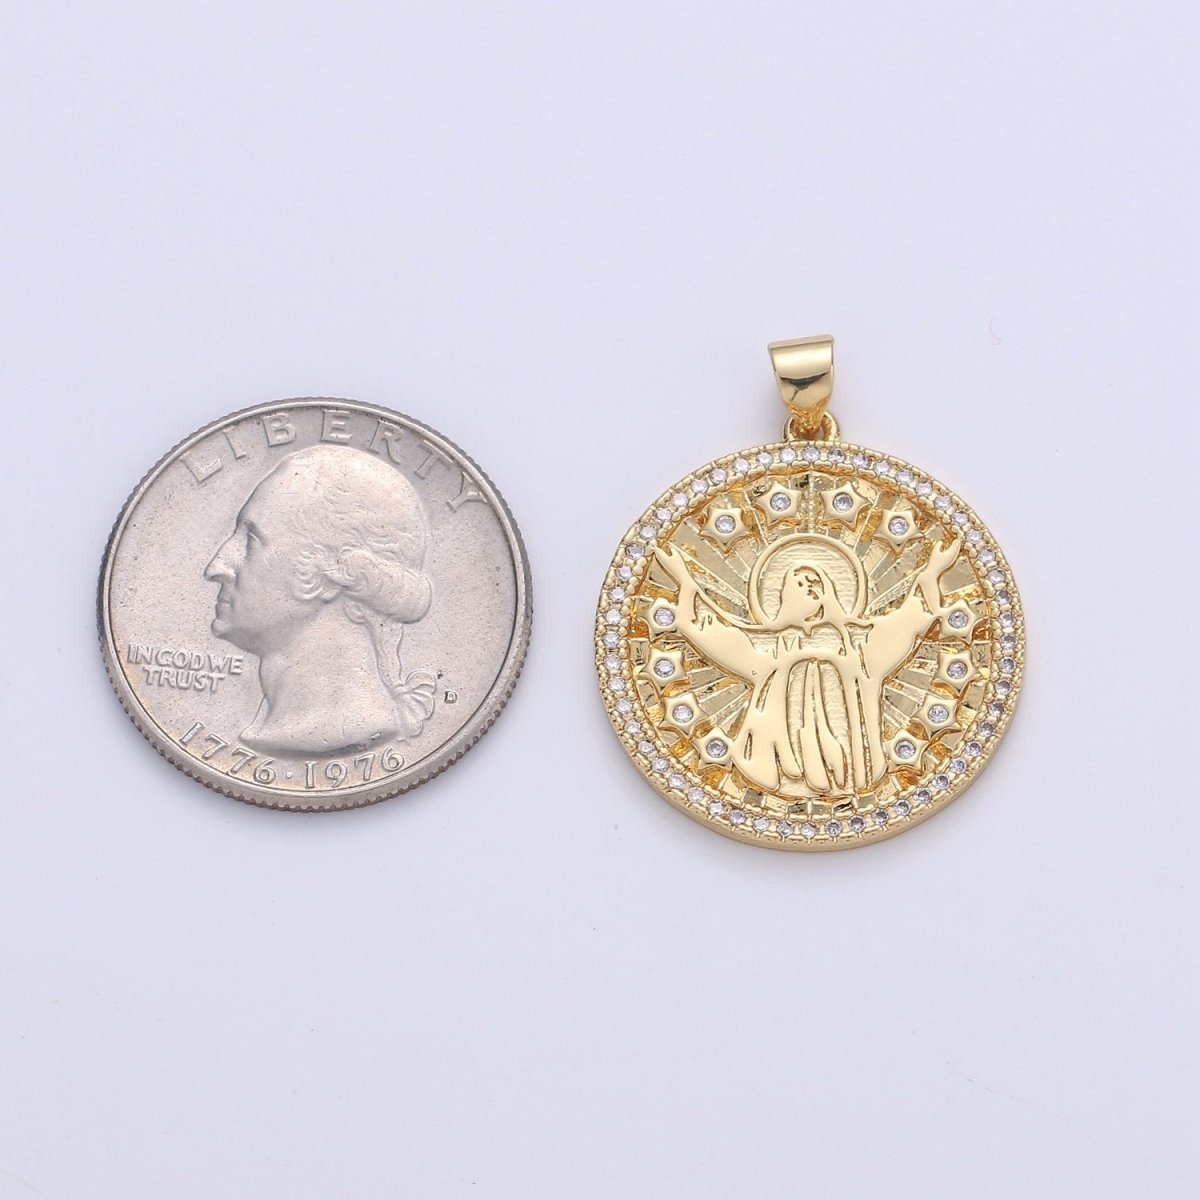 Micro Pave Jesus Cristo Round Pendant 24K gold Filled Charm Catholic pendant, Religious charm, DIY Jewelry Necklace making - DLUXCA